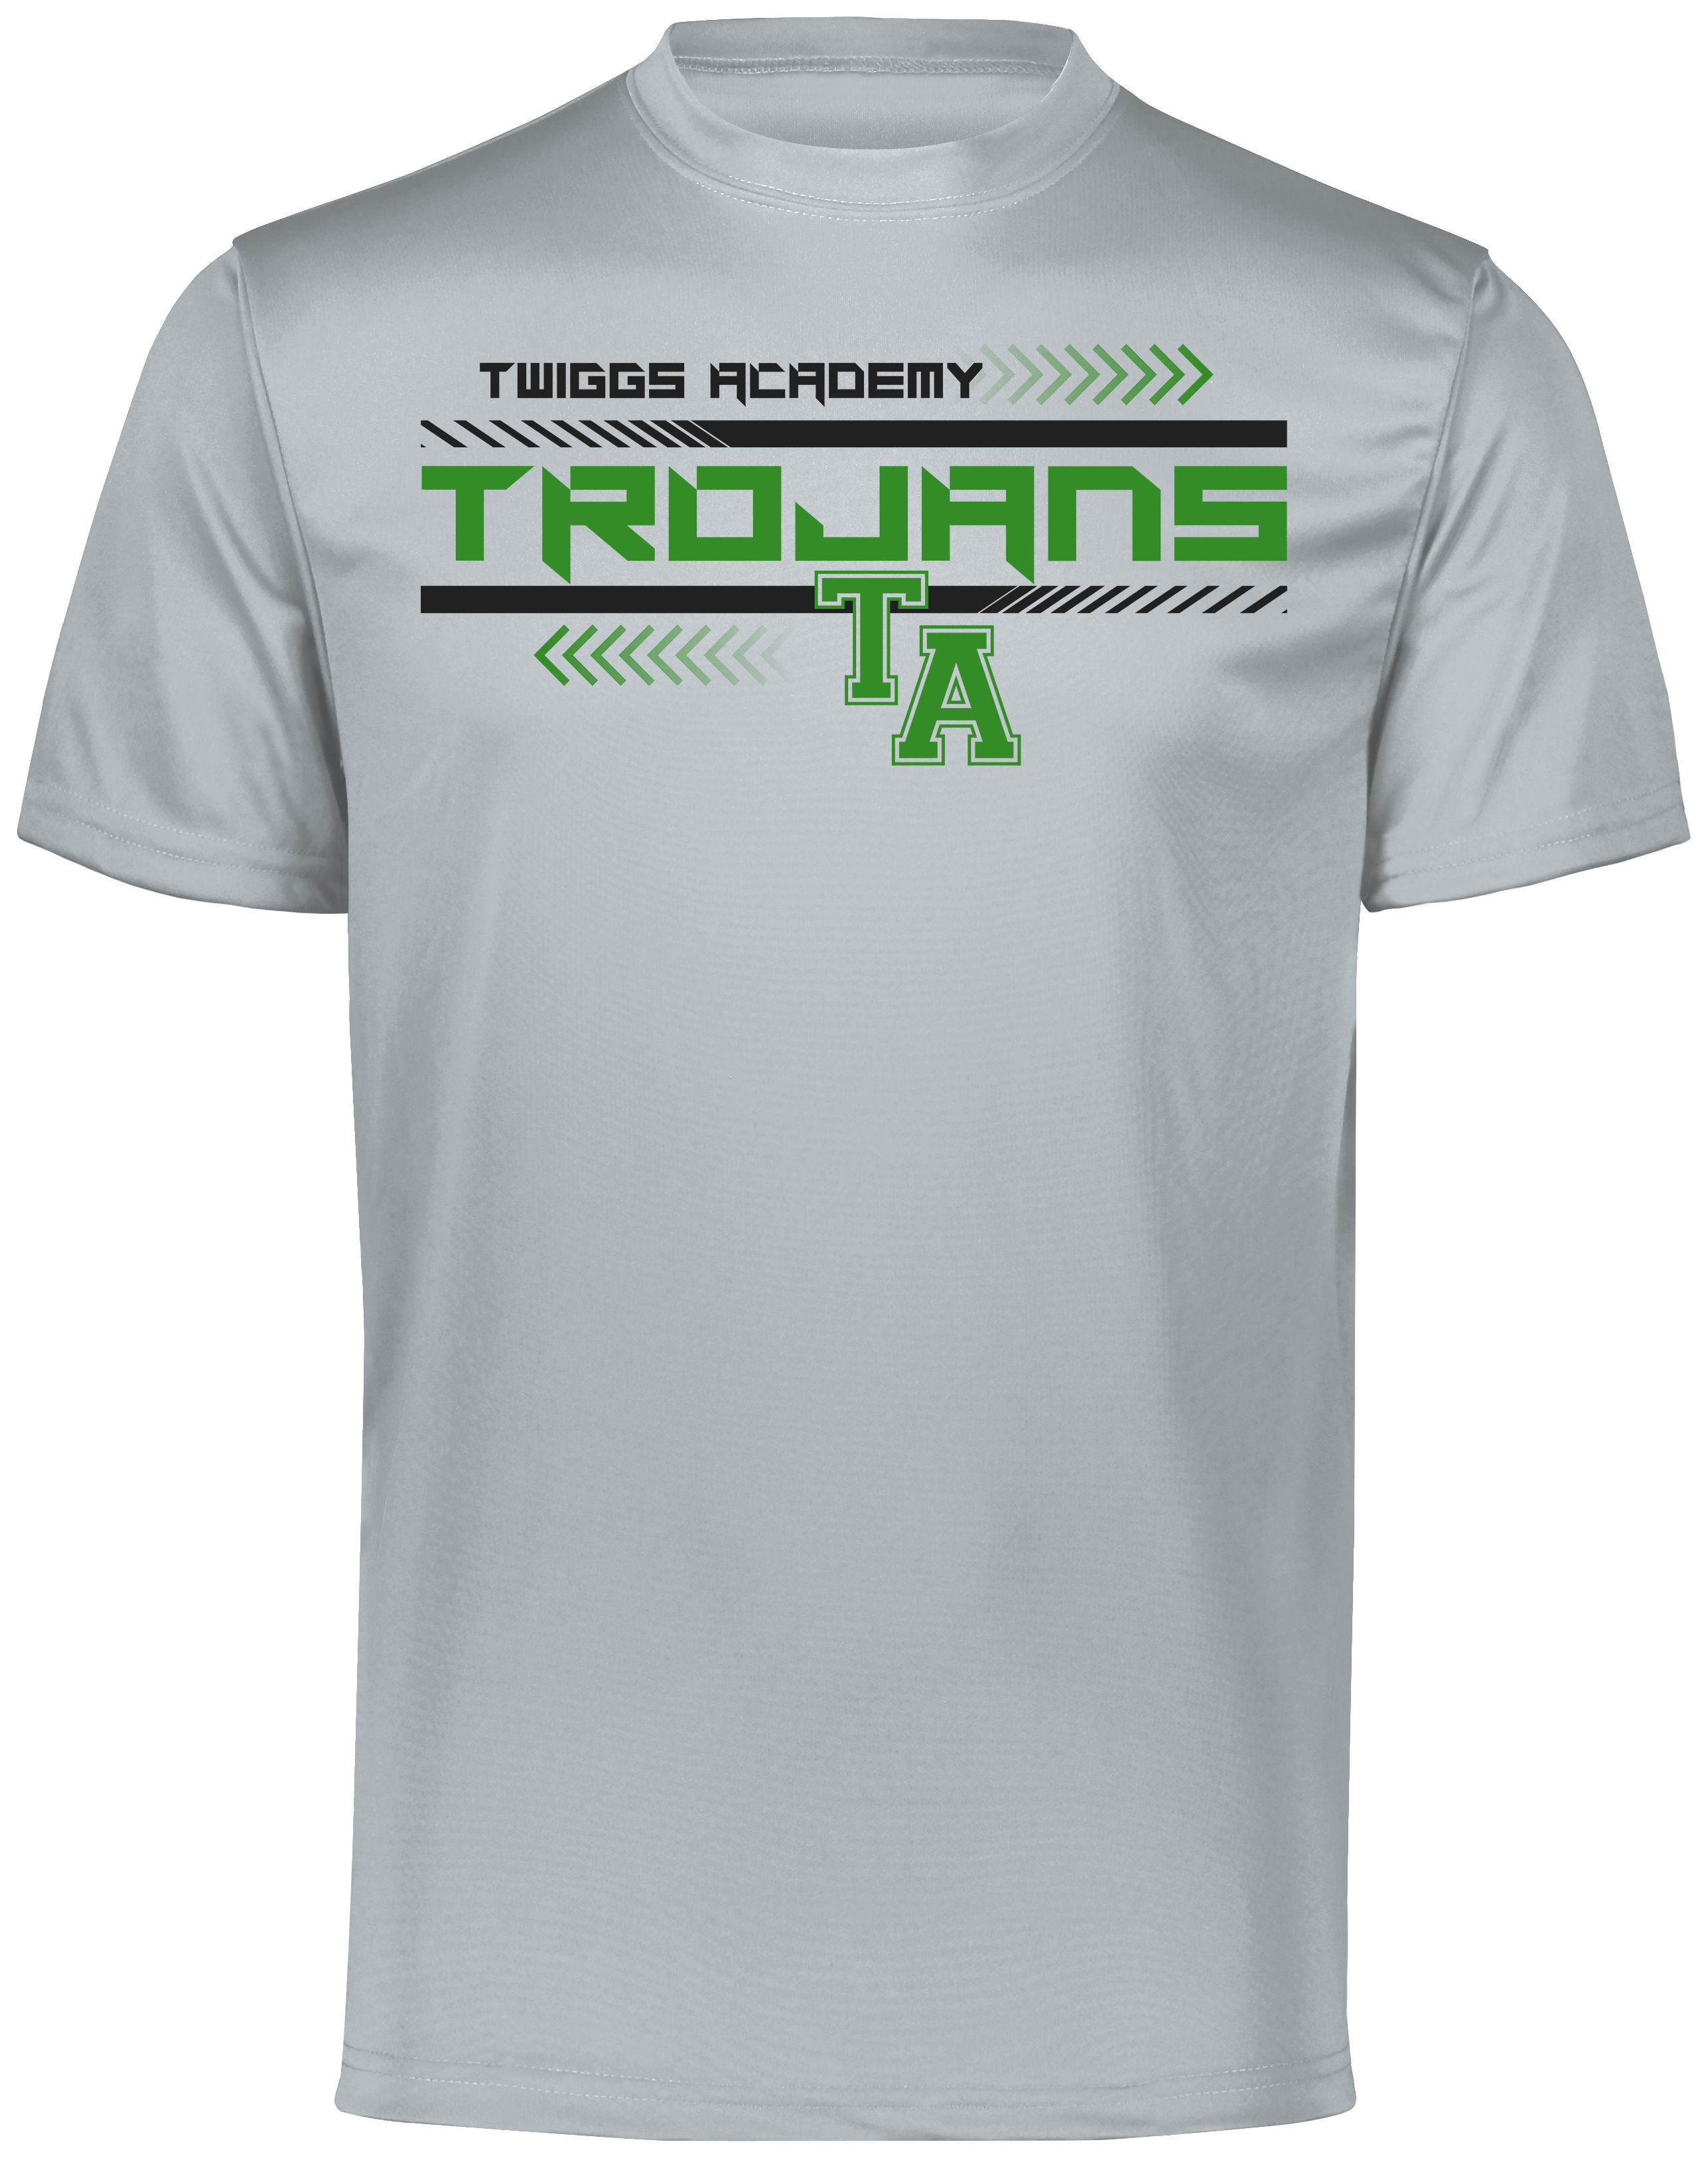 Twiggs Academy- Twiggs Academy TA Shirt - Silver (Tee/Hoodie/Sweatshirt)